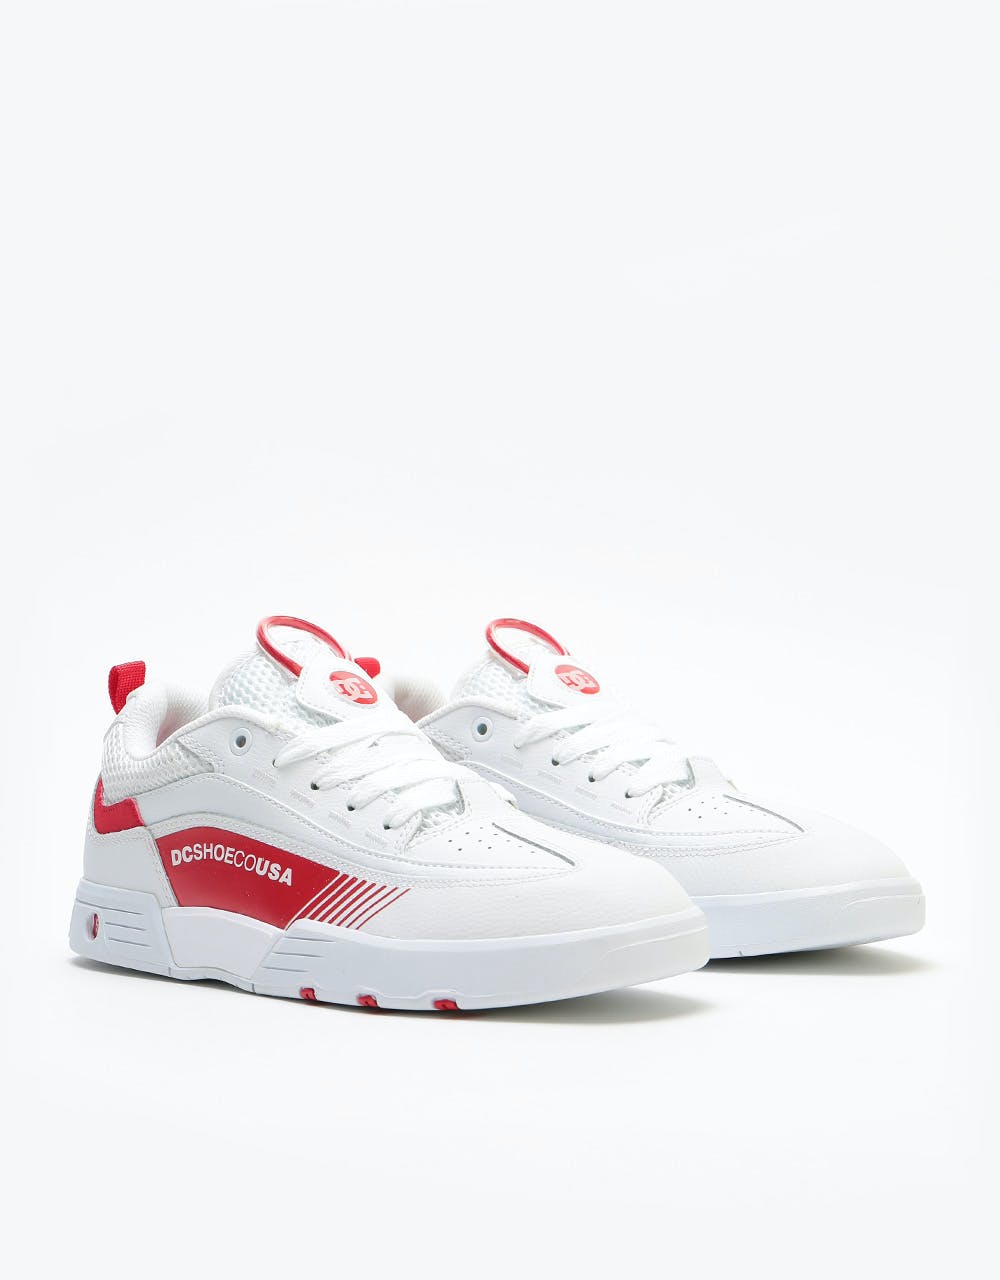 DC Legacy 98 Slim Skate Shoes - White/Red